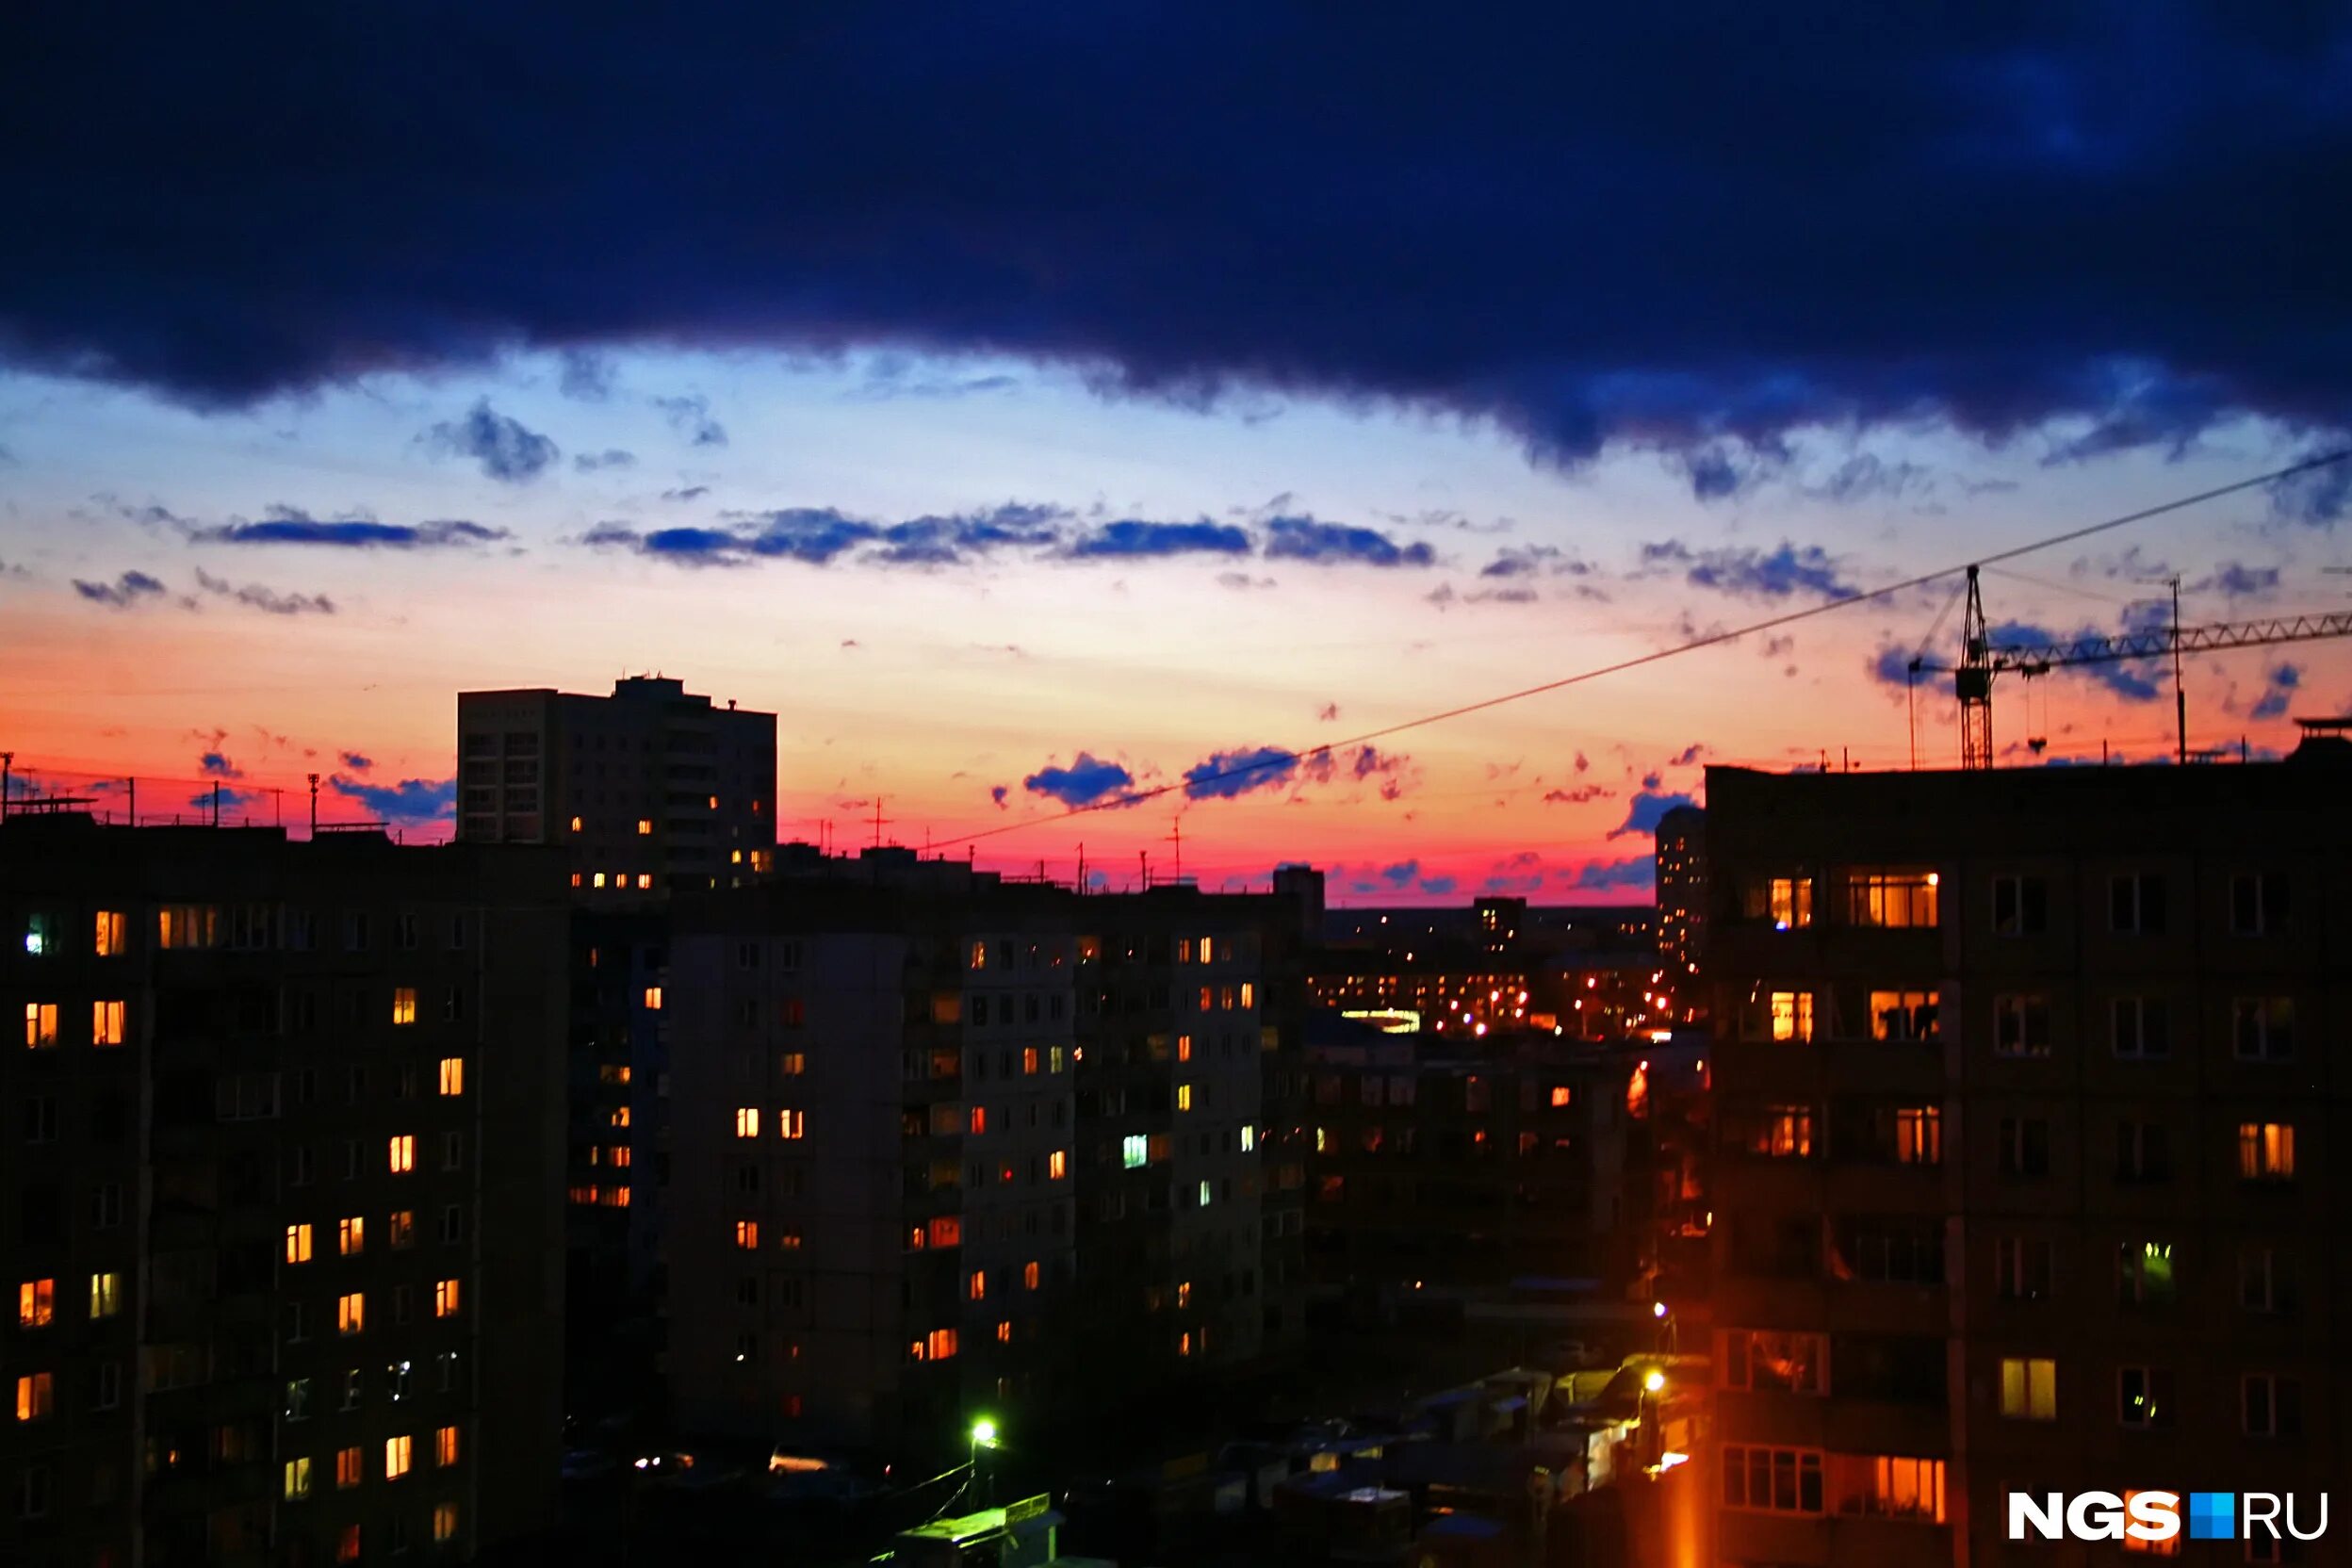 Вечер 12 12 21. Новосибирск вечером. Новосибирск ночью из окна многоэтажки. Вечерняя Первомайка Новосибирск. Новосибирск вечером фото.